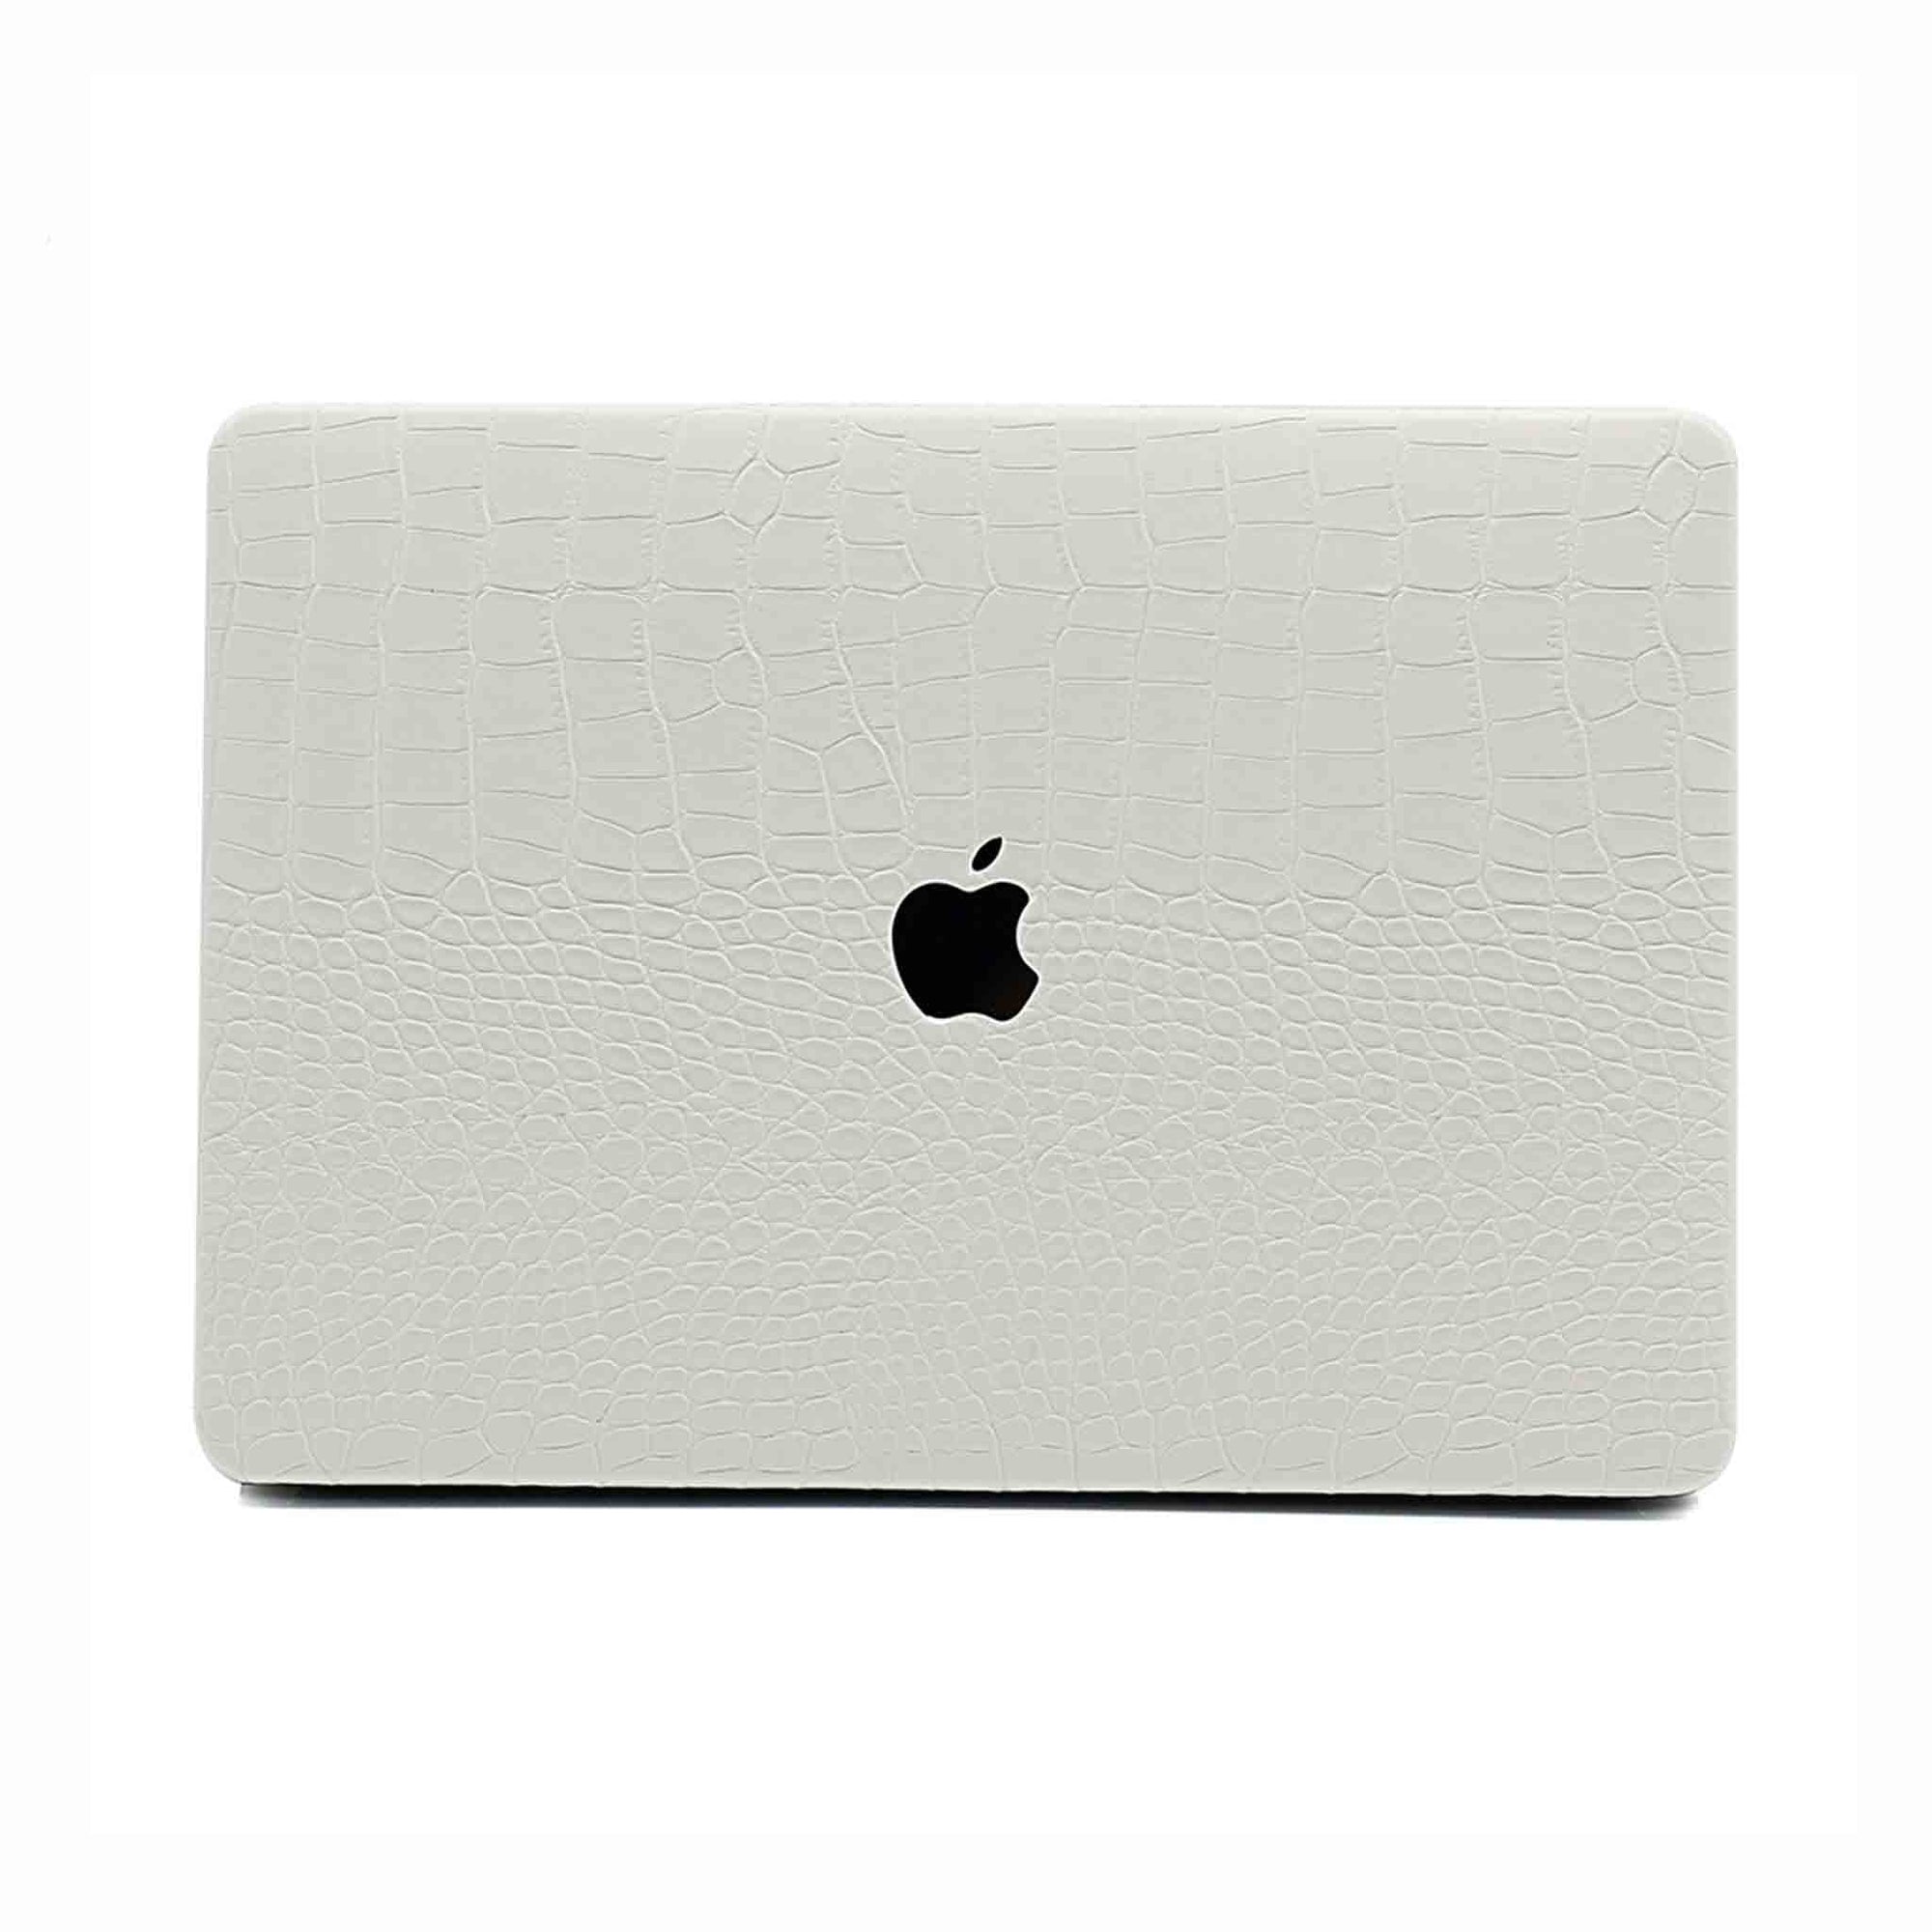 Matte MacBook Case